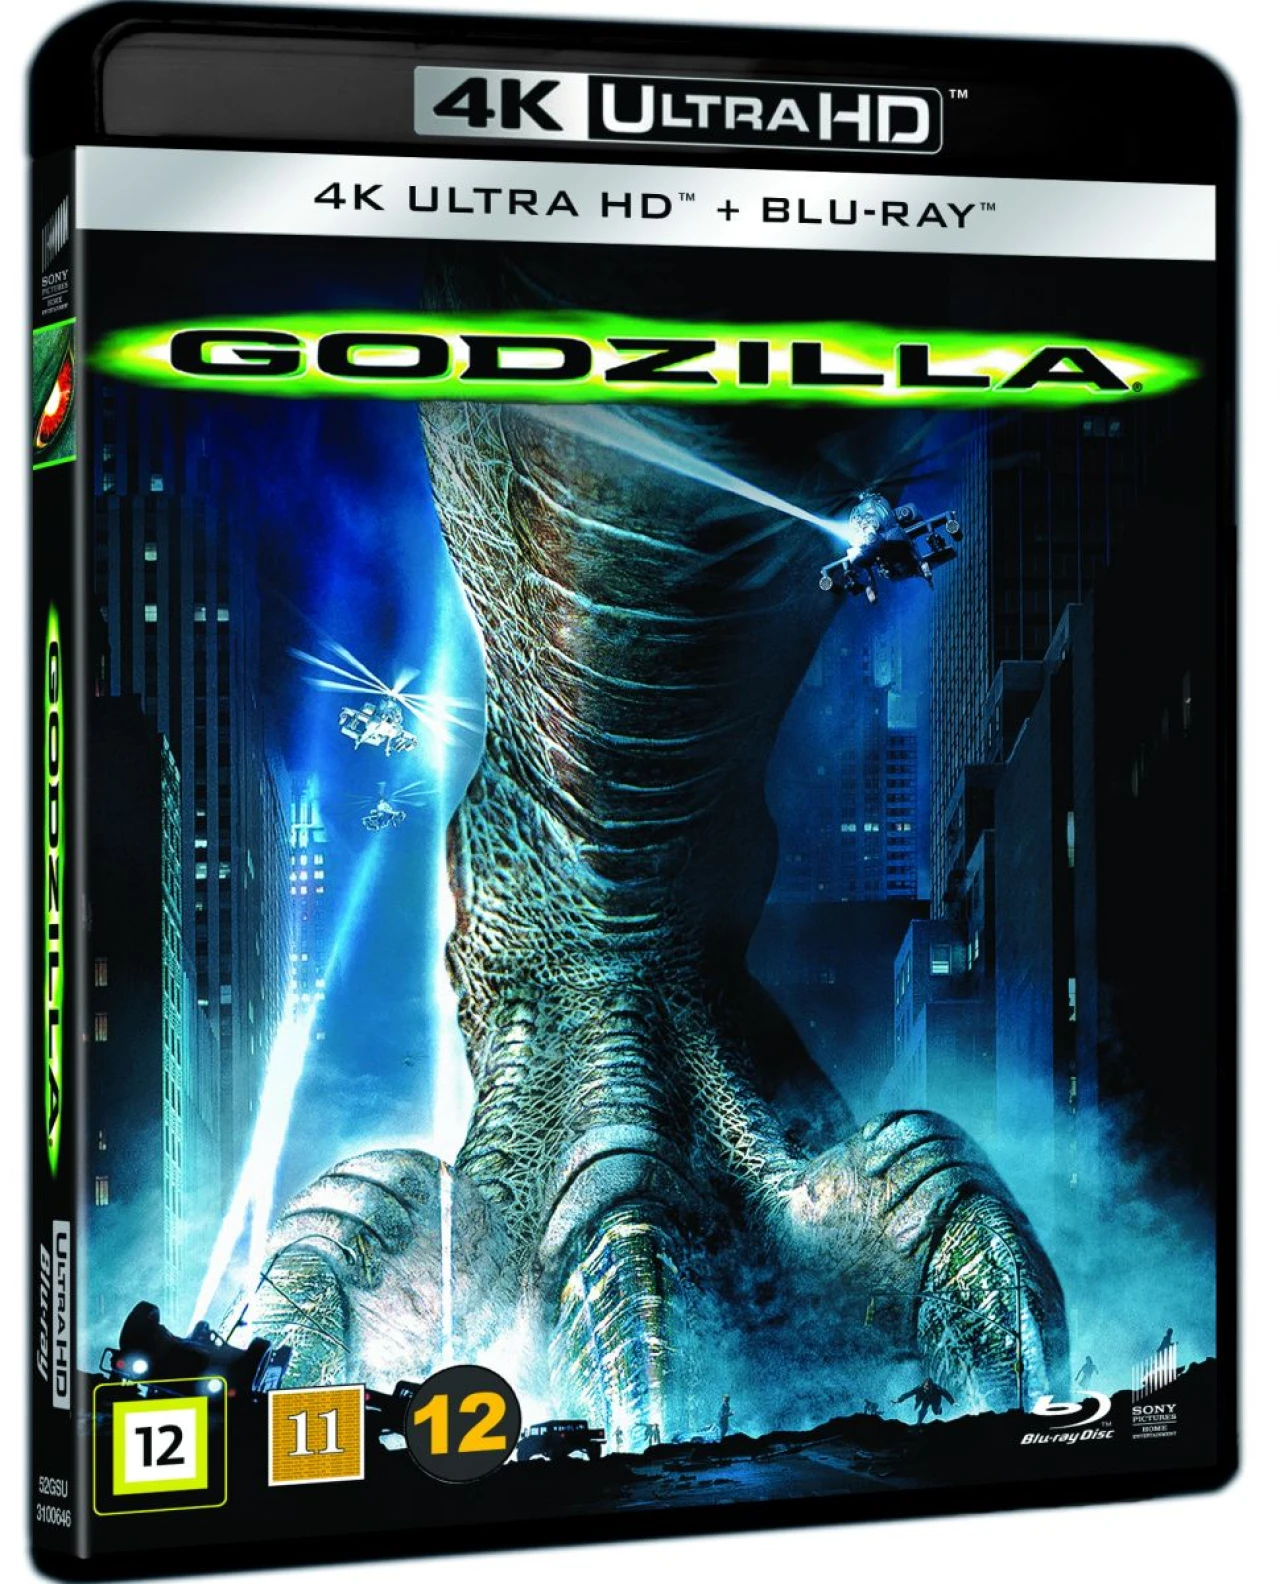 Godzilla 4K Ultra HD